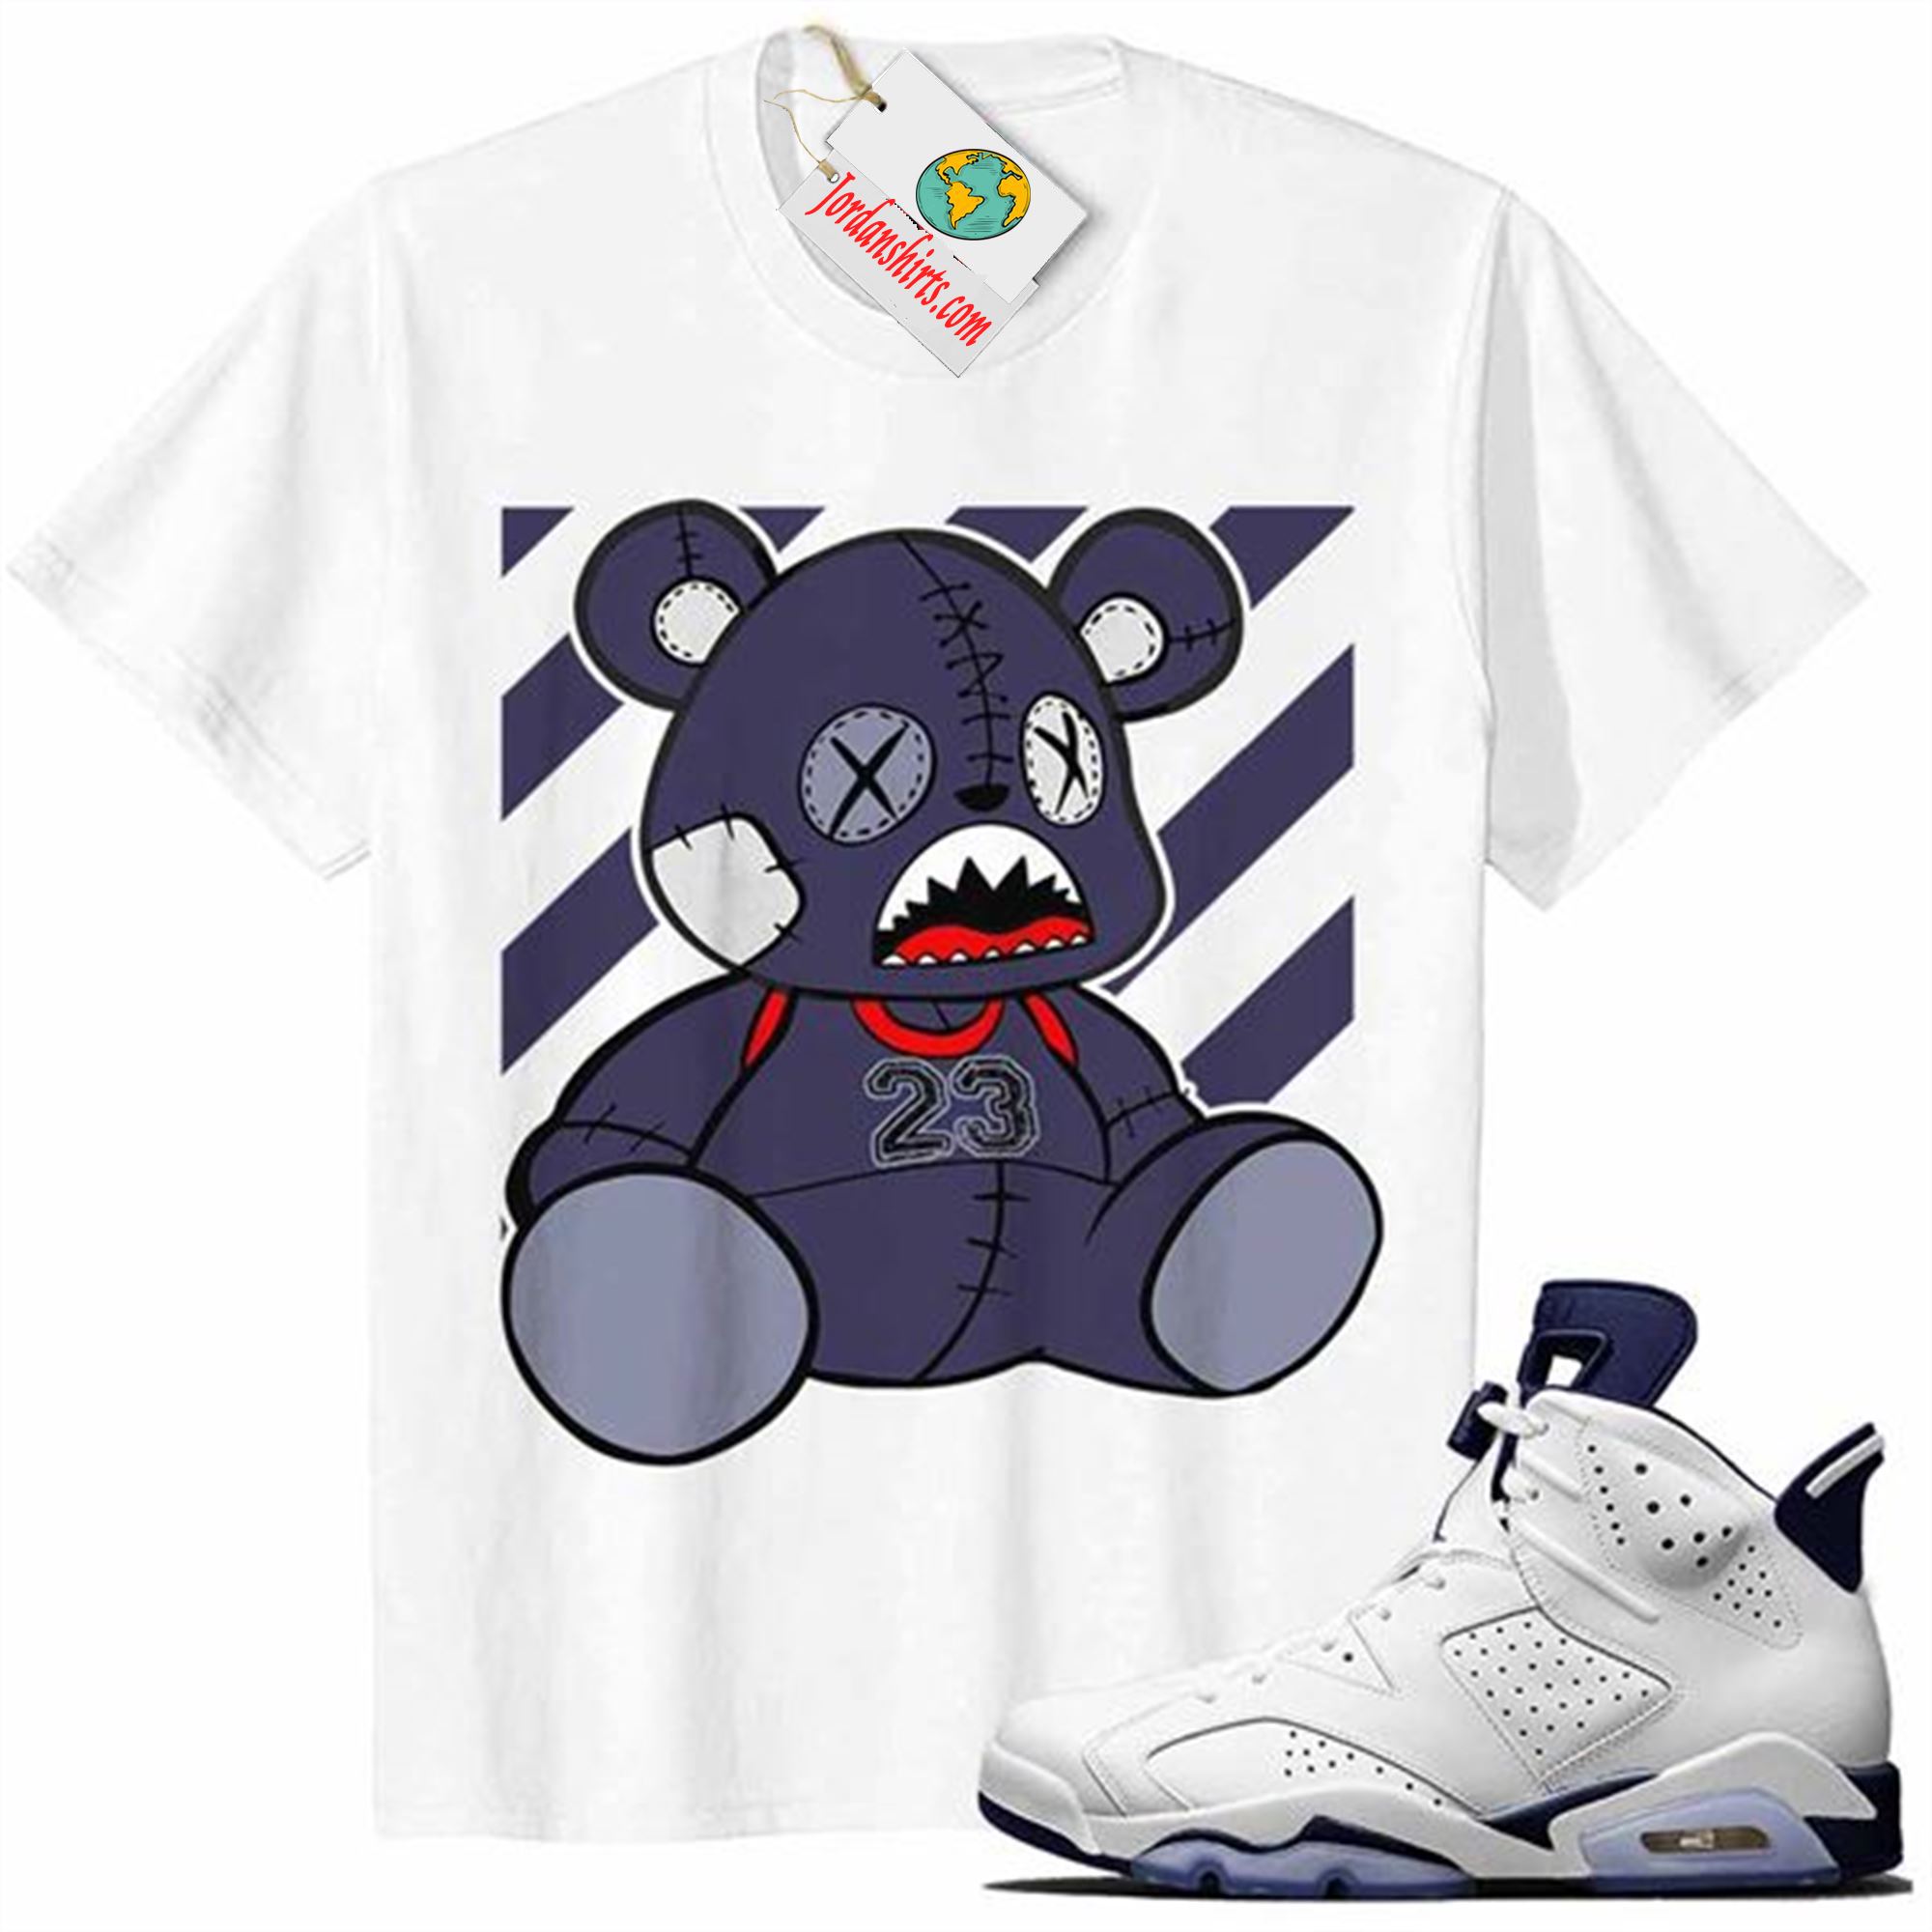 Jordan 6 Shirt, 23 Teddy White Air Jordan 6 Midnight Navy 6s Plus Size Up To 5xl